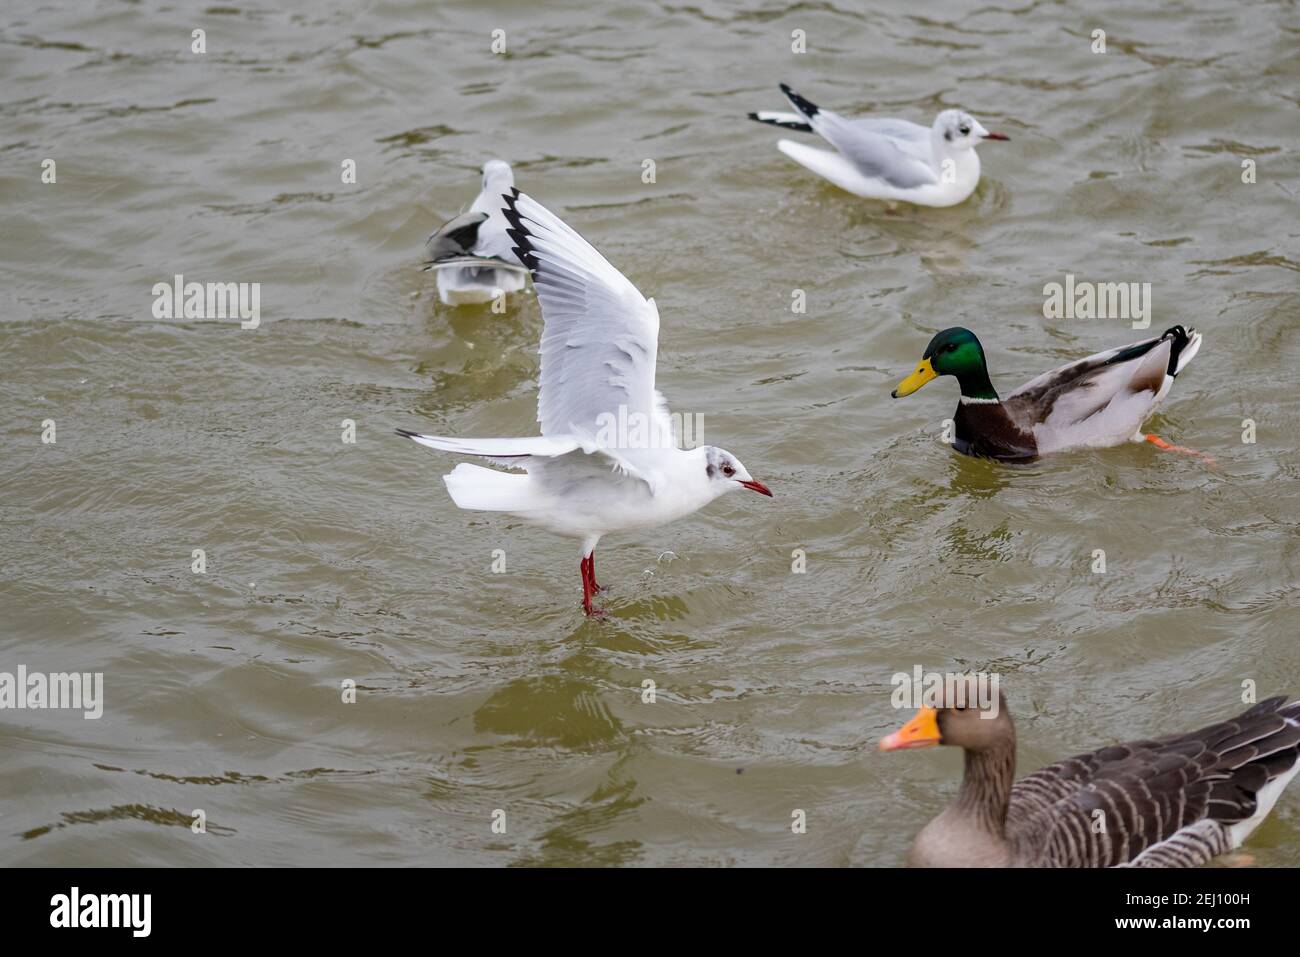 Gull landing on water with ducks Stock Photo